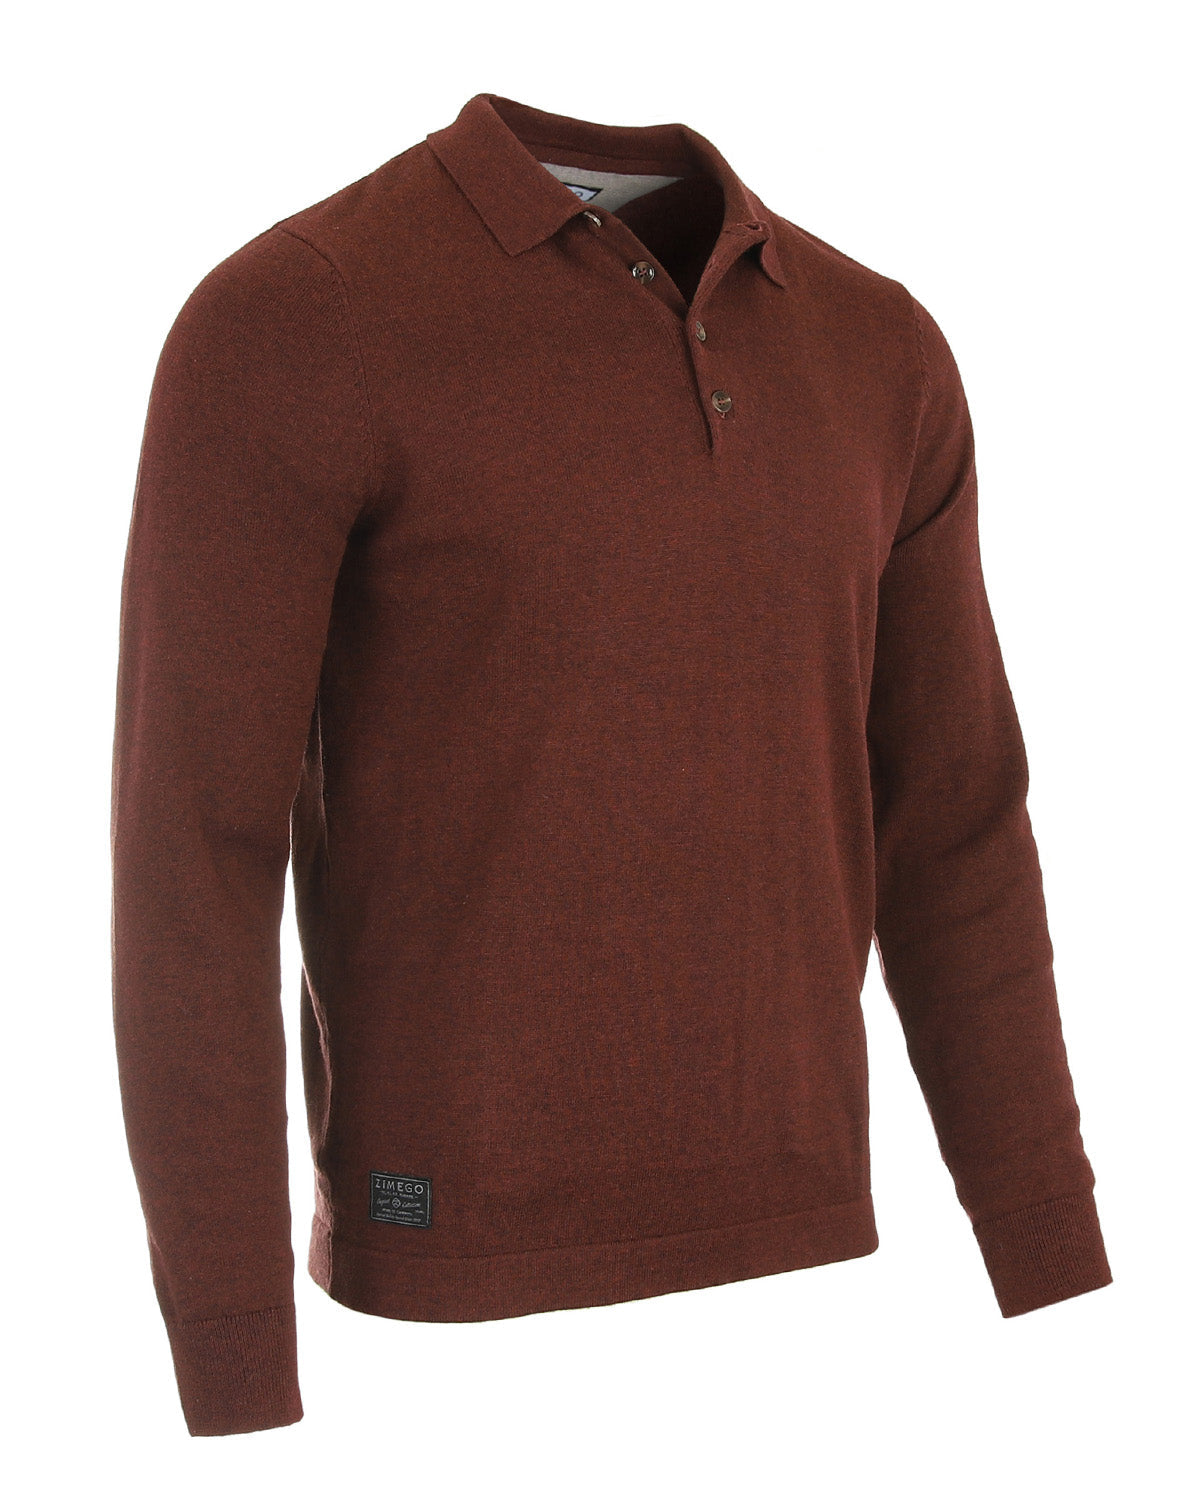 TEEK - Maroon Mens Casual Polo Sweater - Long Sleeve SWEATER TEEK M   